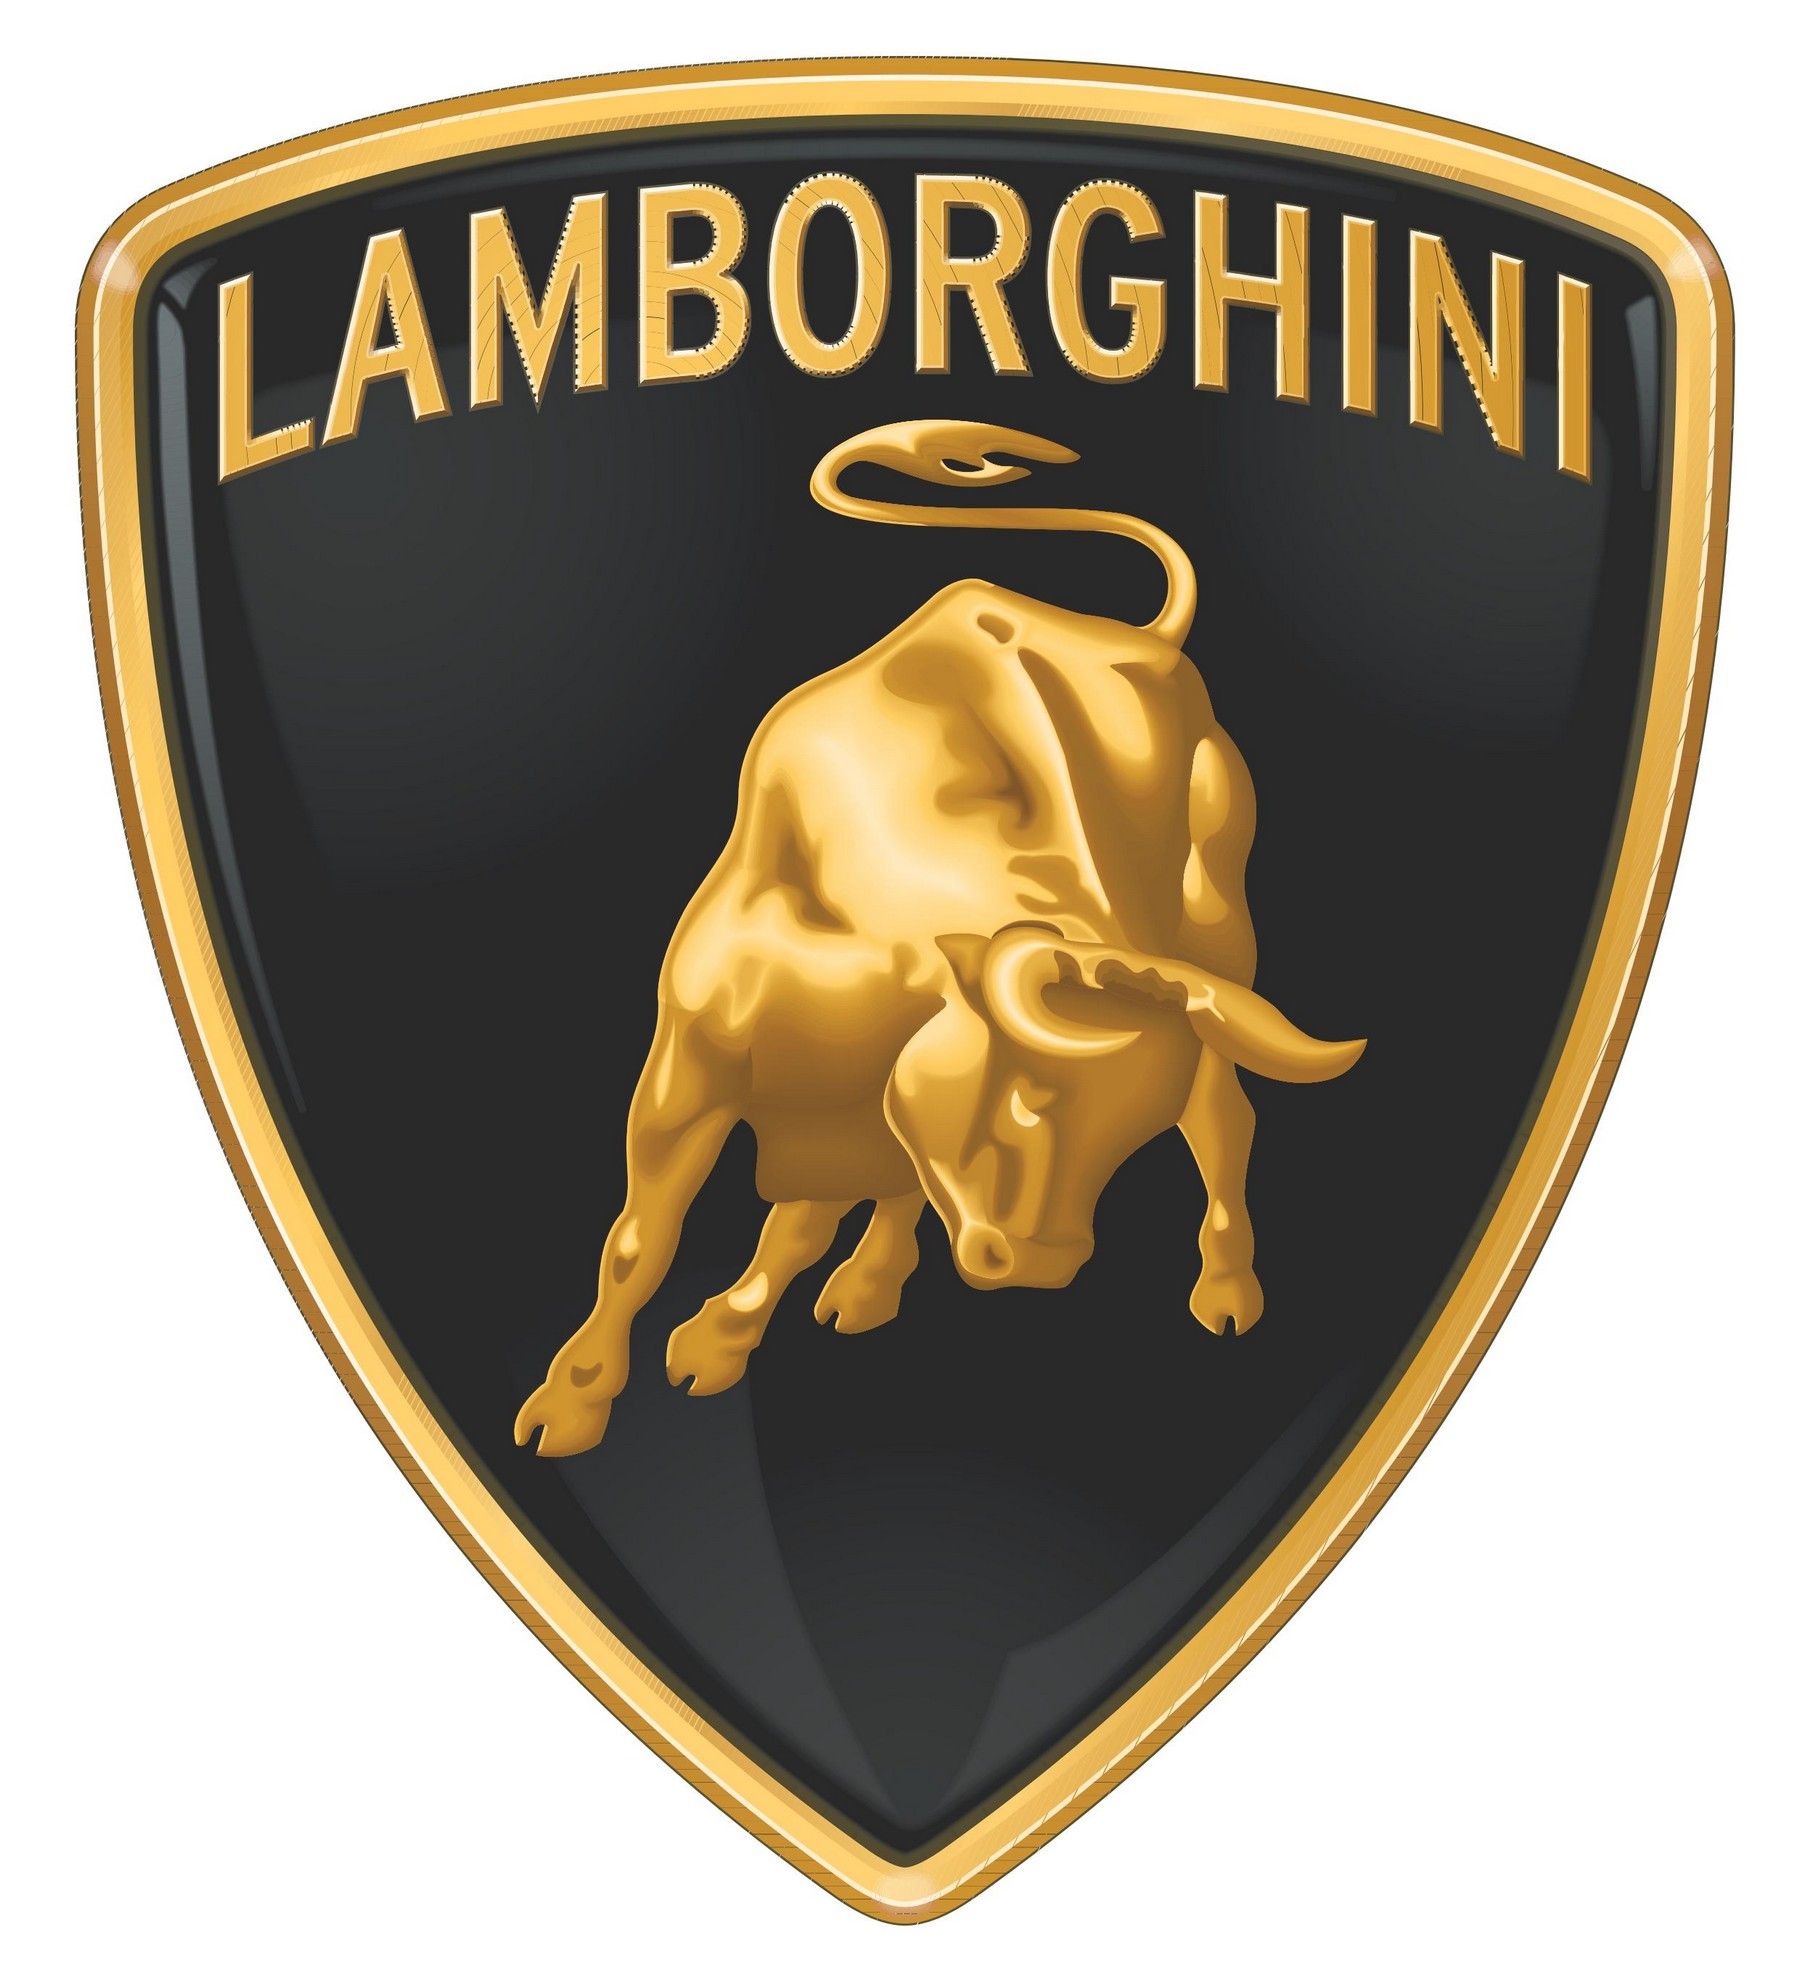 Lamborghini logo photo